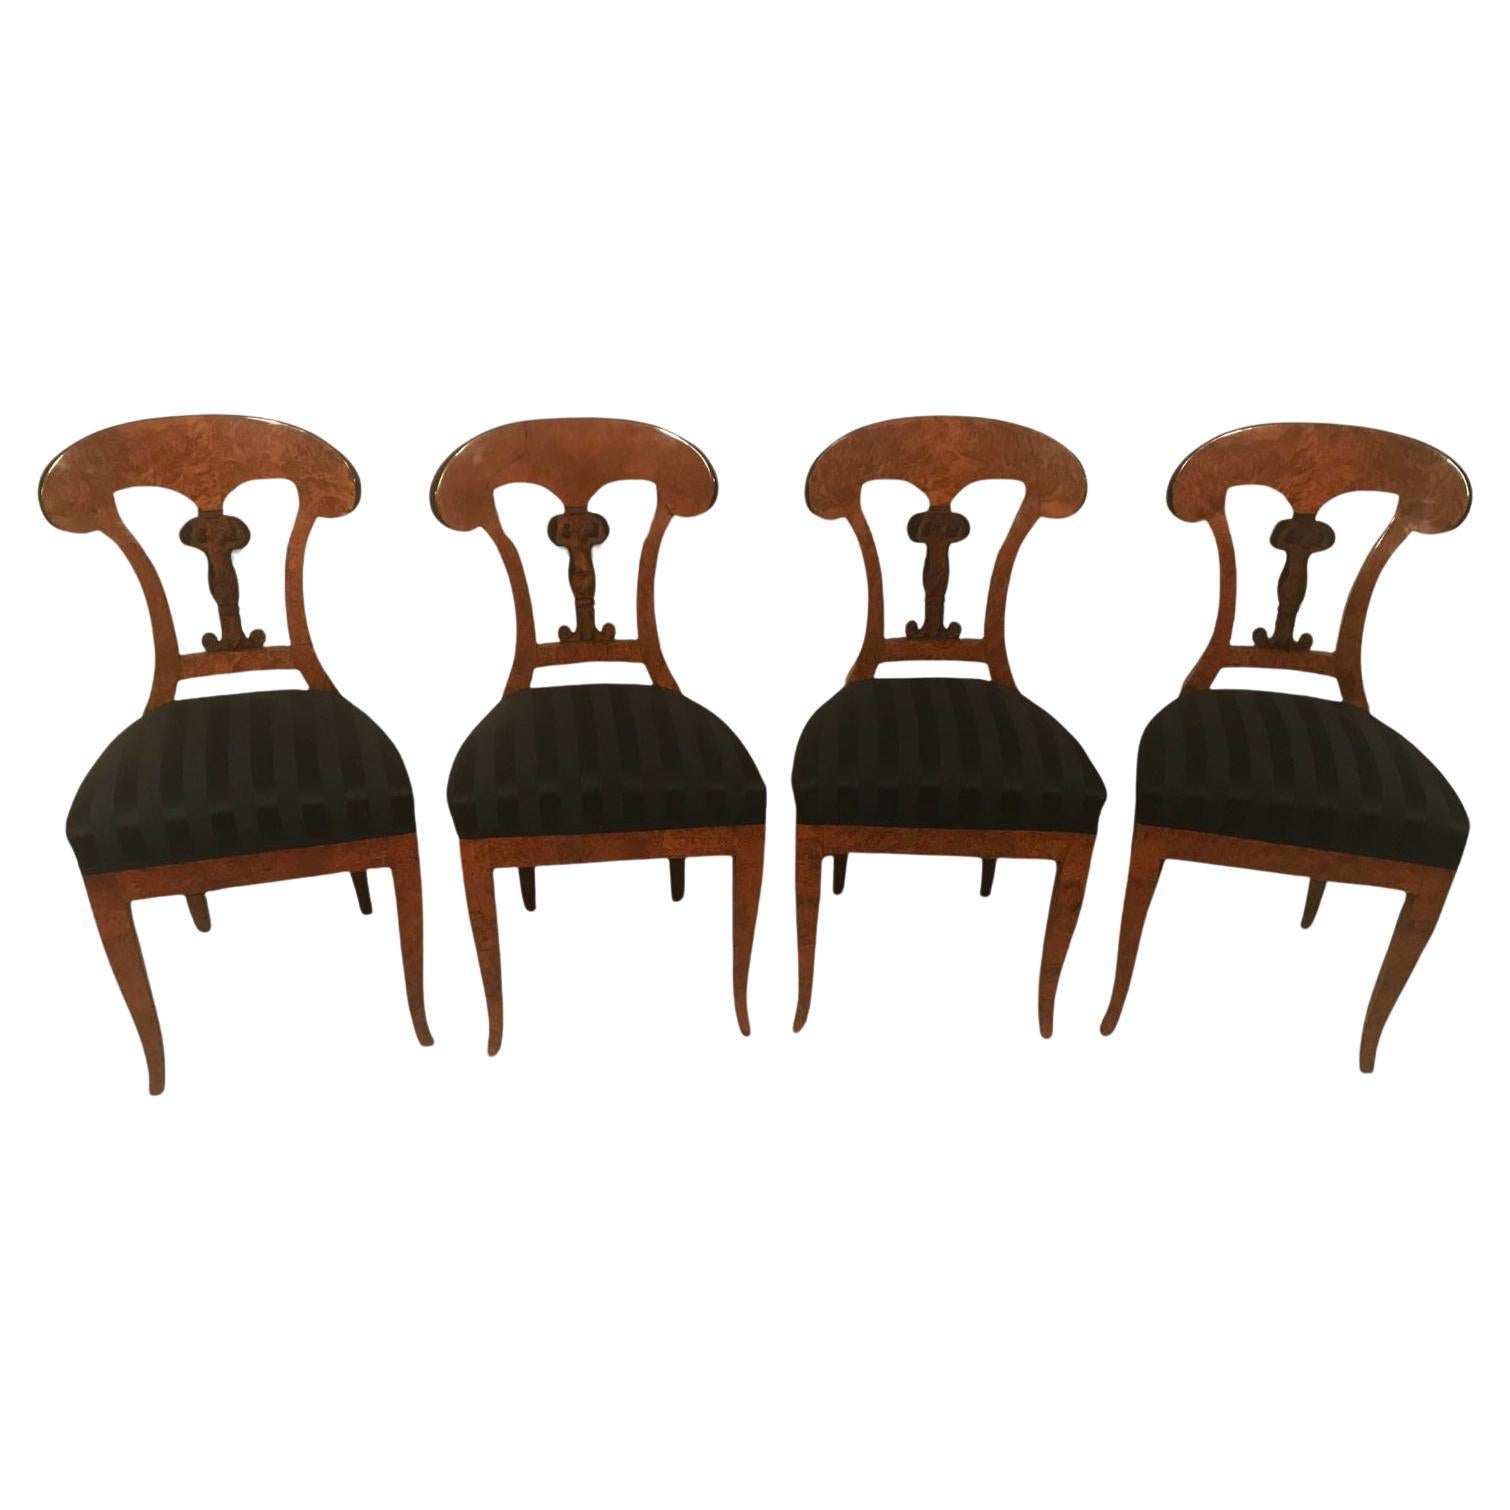 A set of four exquisite Biedermeier Chairs, 1820